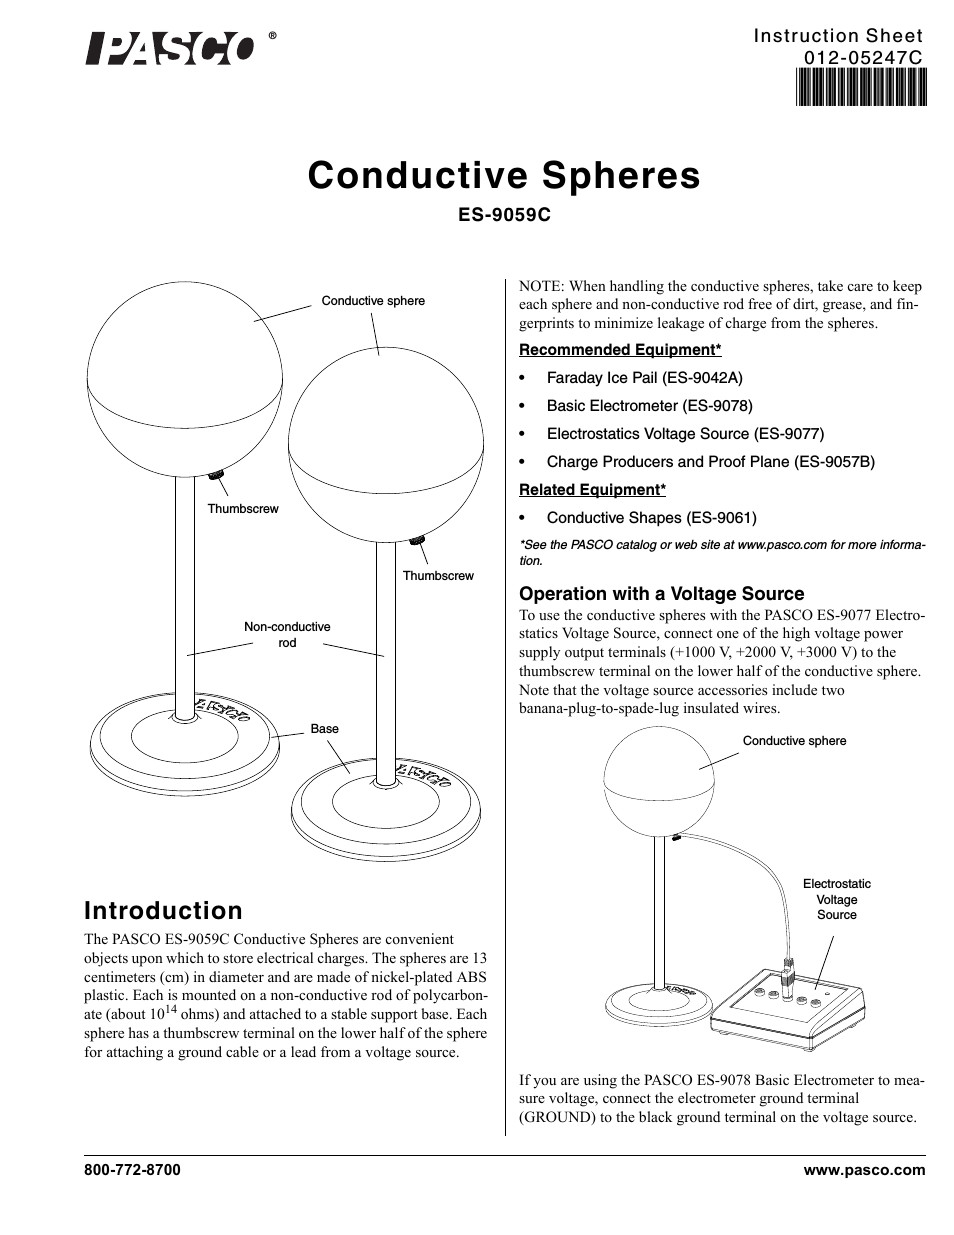 ES-9059C Conductive Spheres